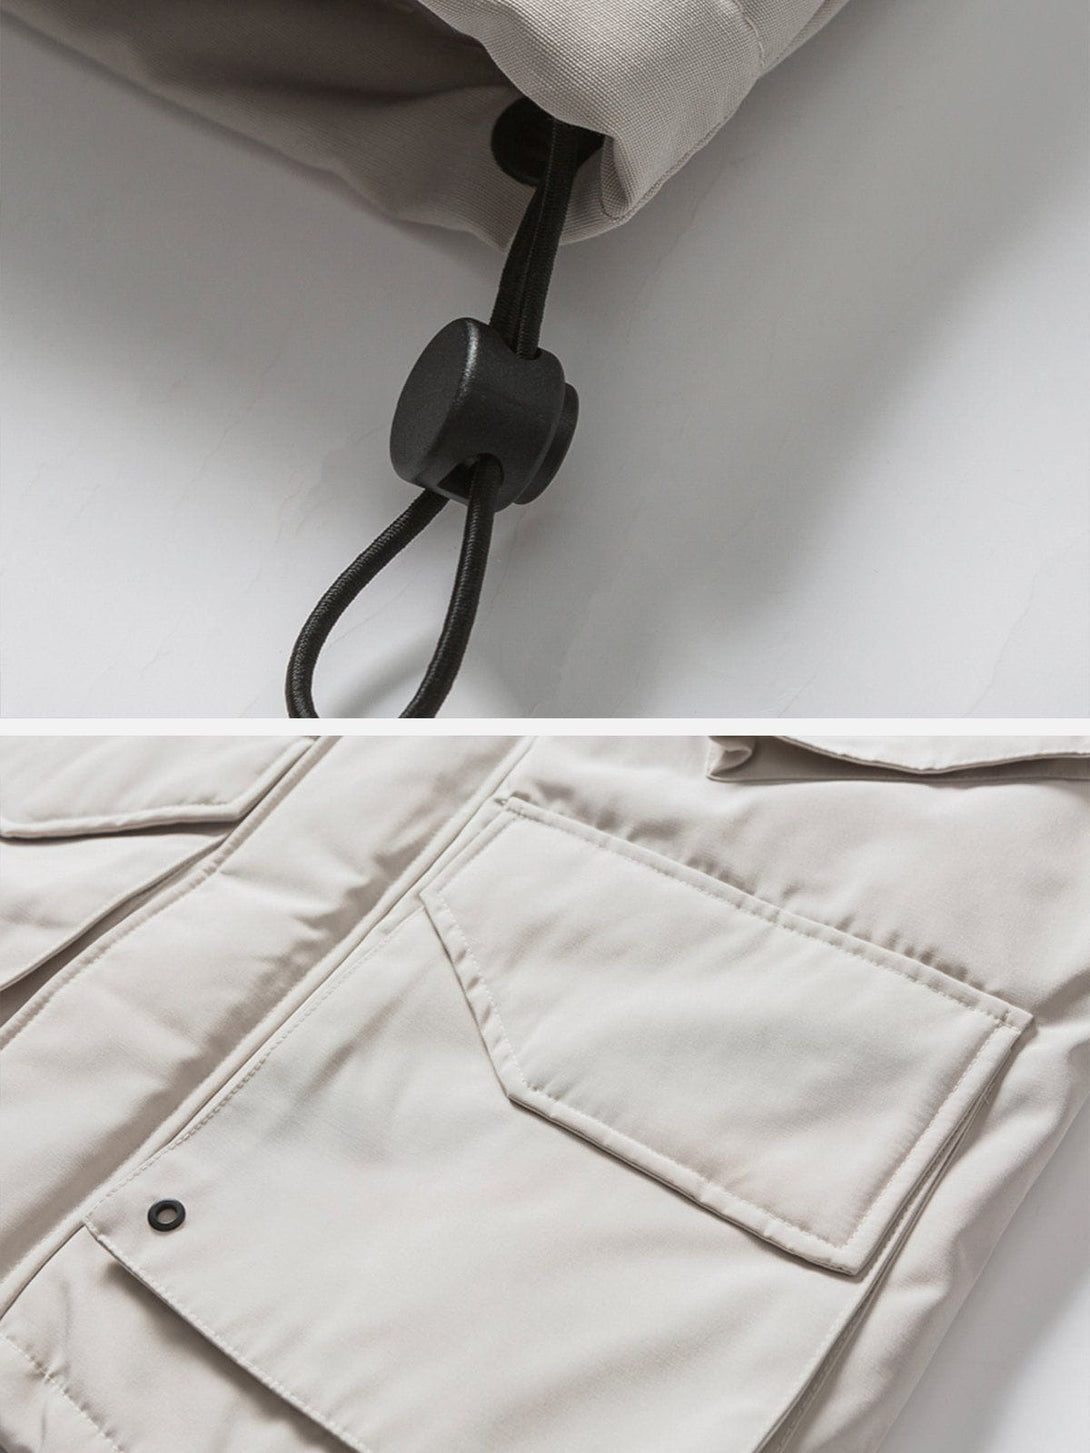 Majesda® - Large Pocket Cargo Winter Coat outfit ideas streetwear fashion